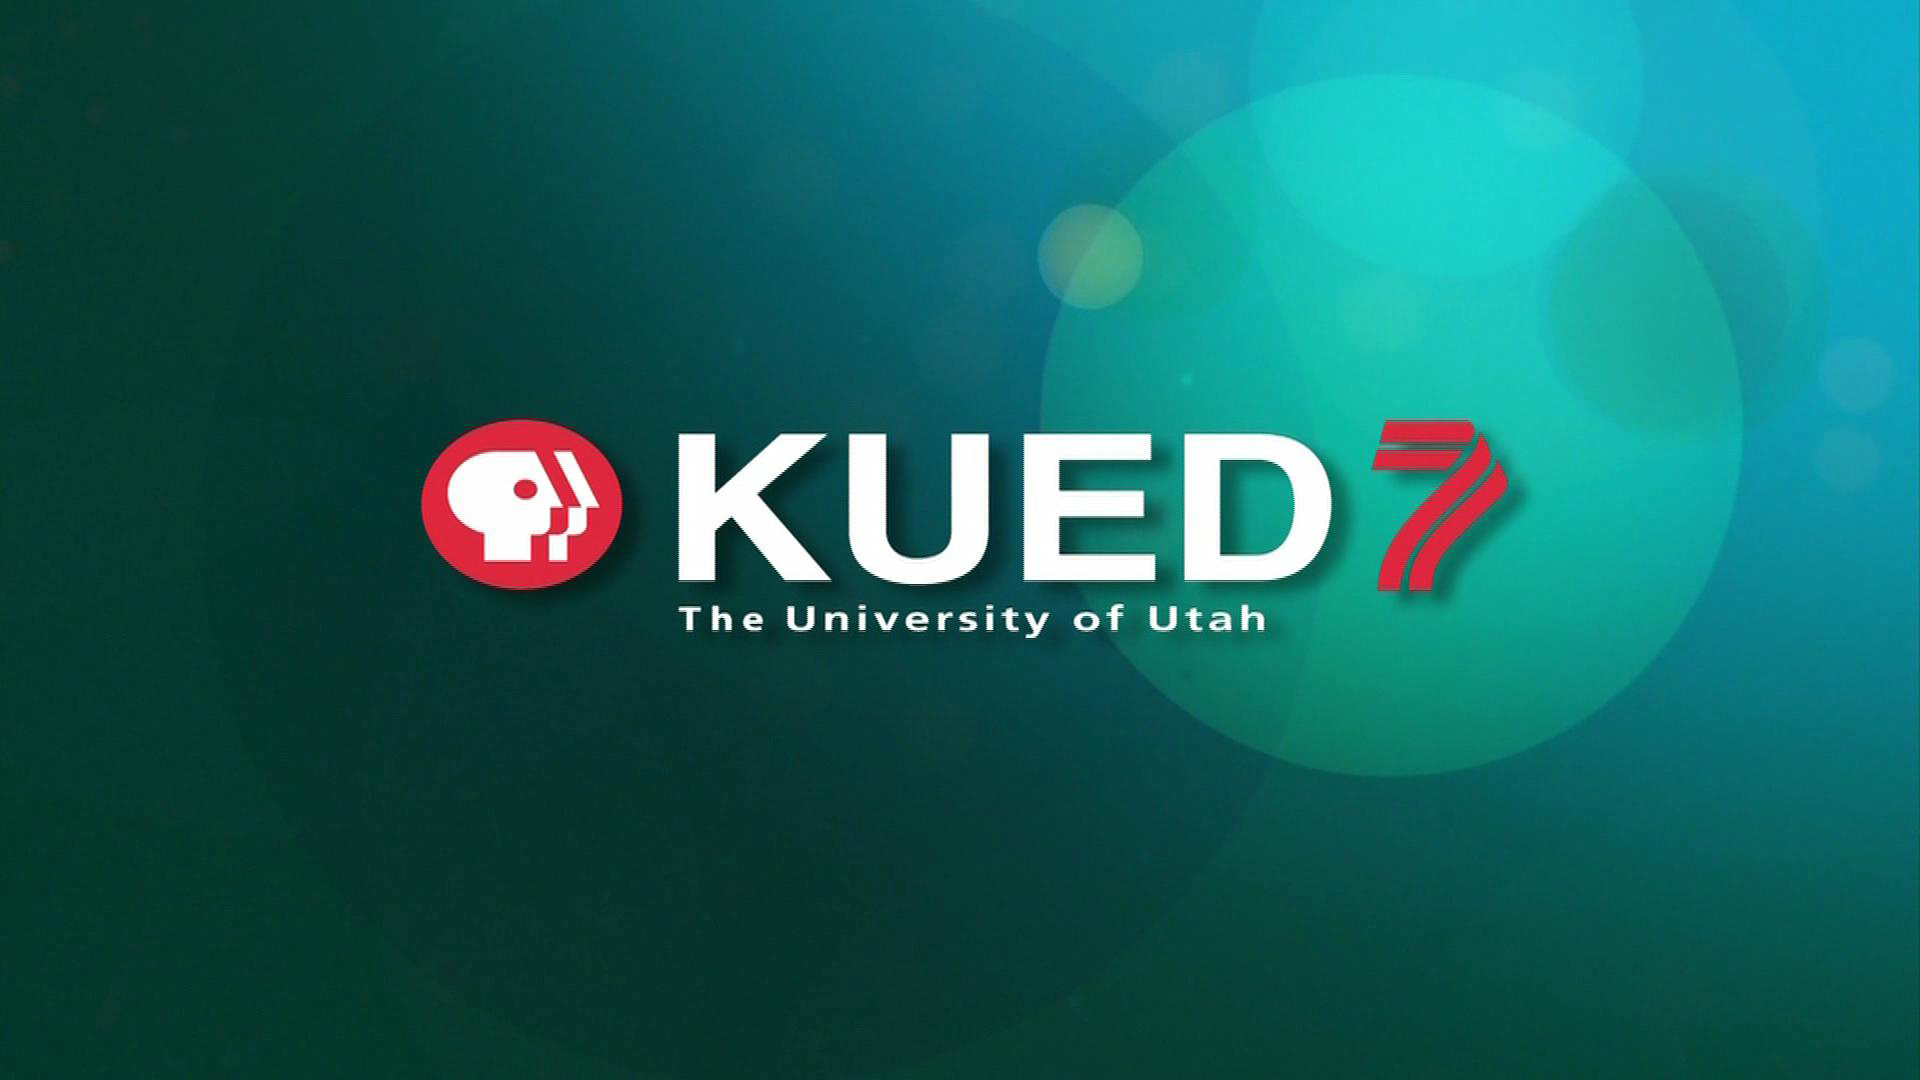 KUED TV Channel 7 Salt Lake City, Utah